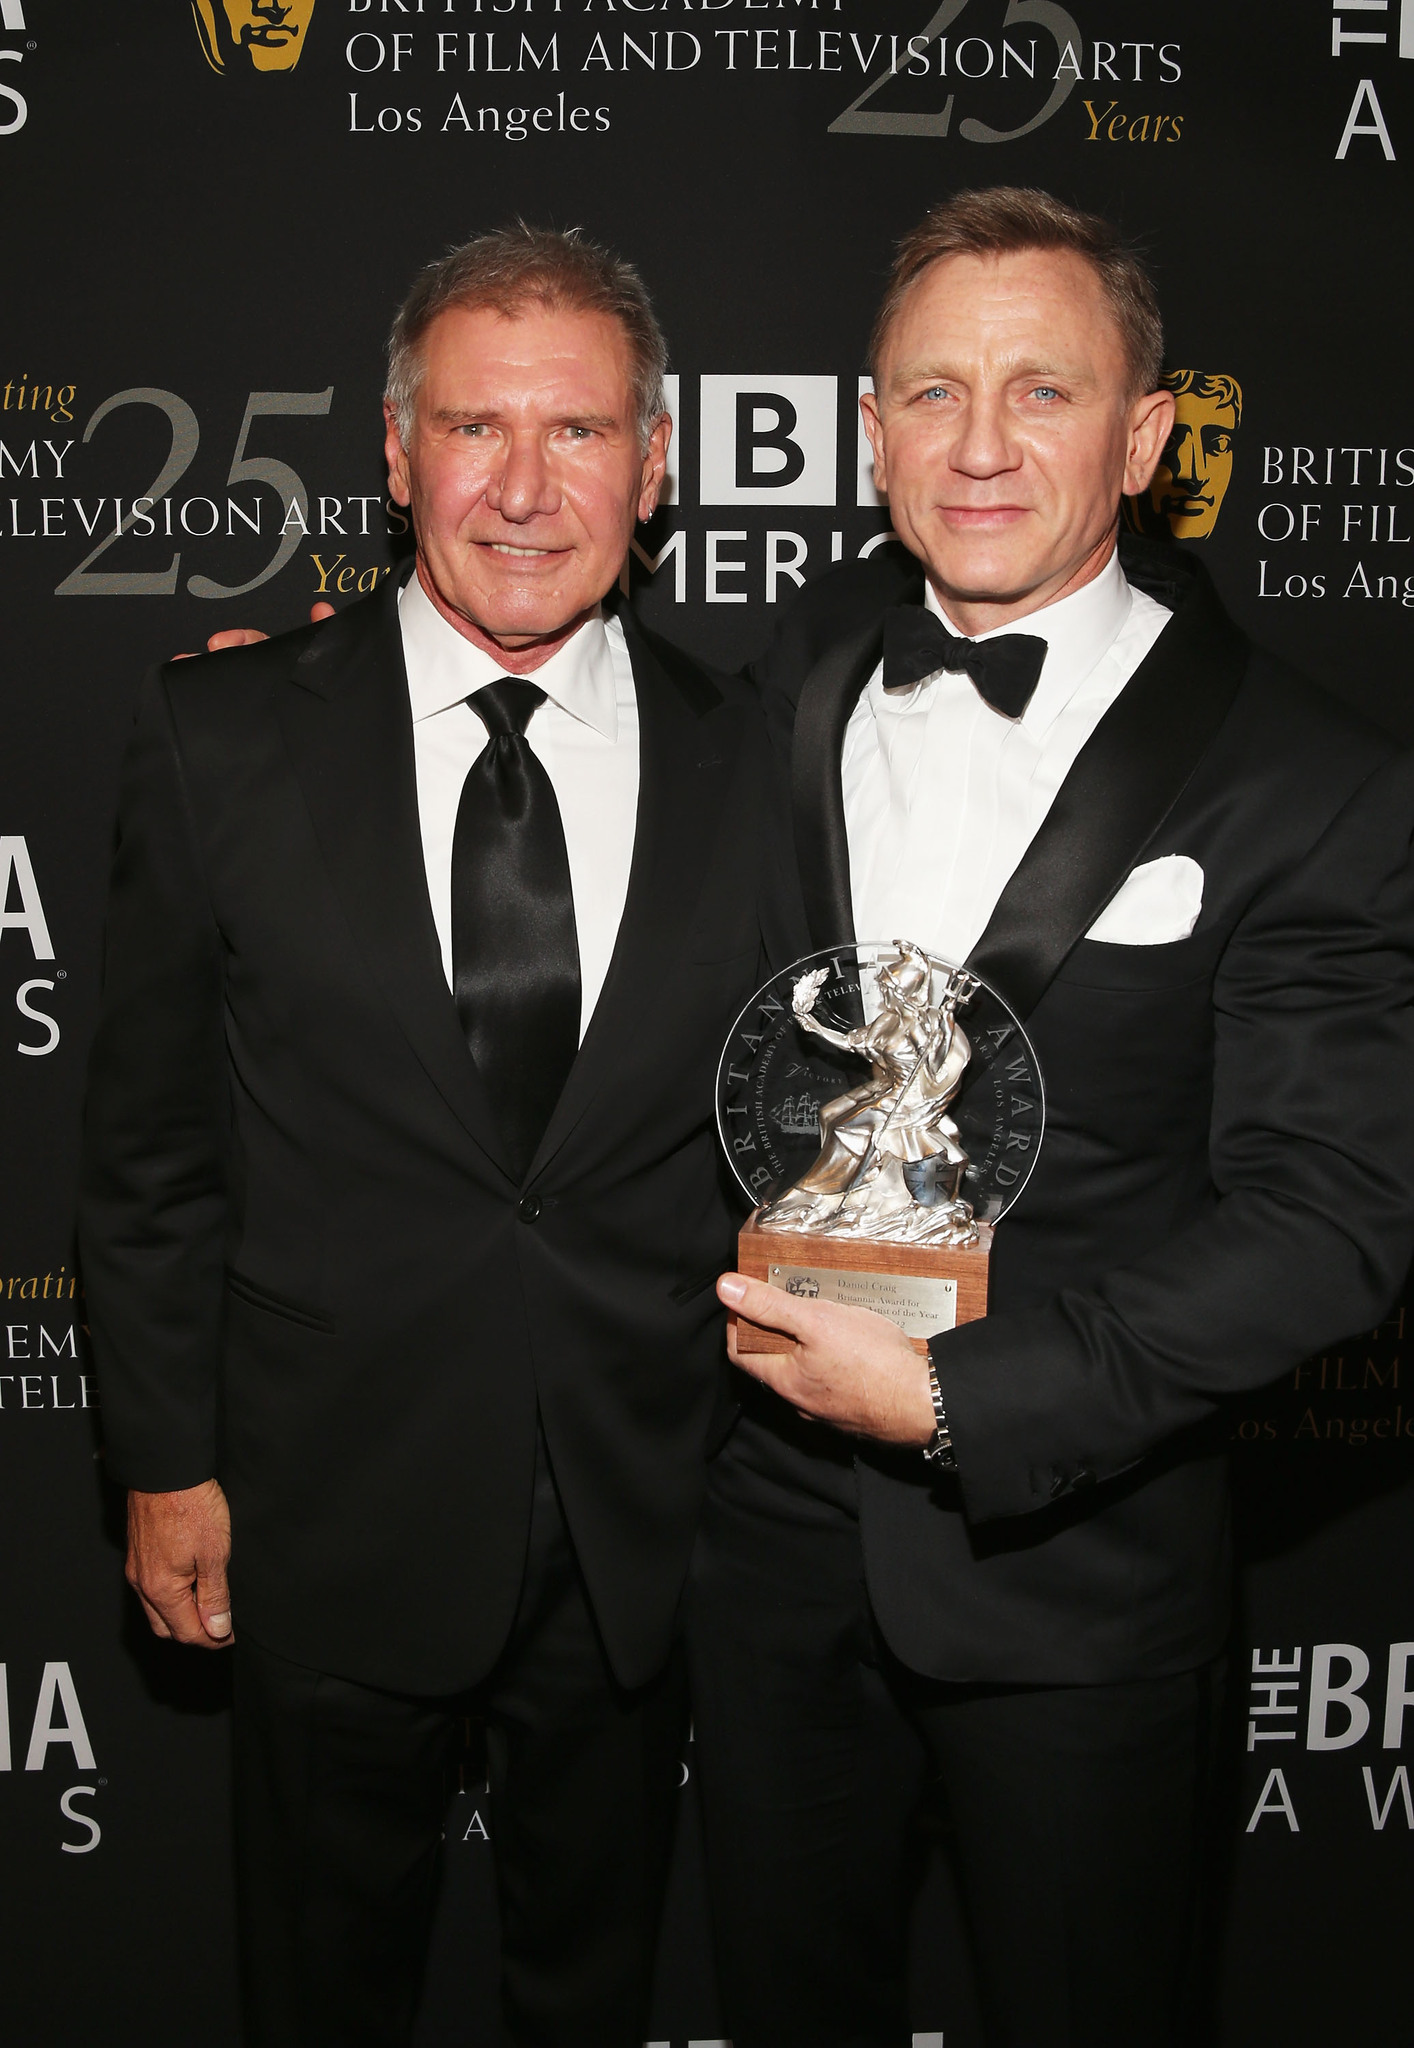 Harrison Ford and Daniel Craig